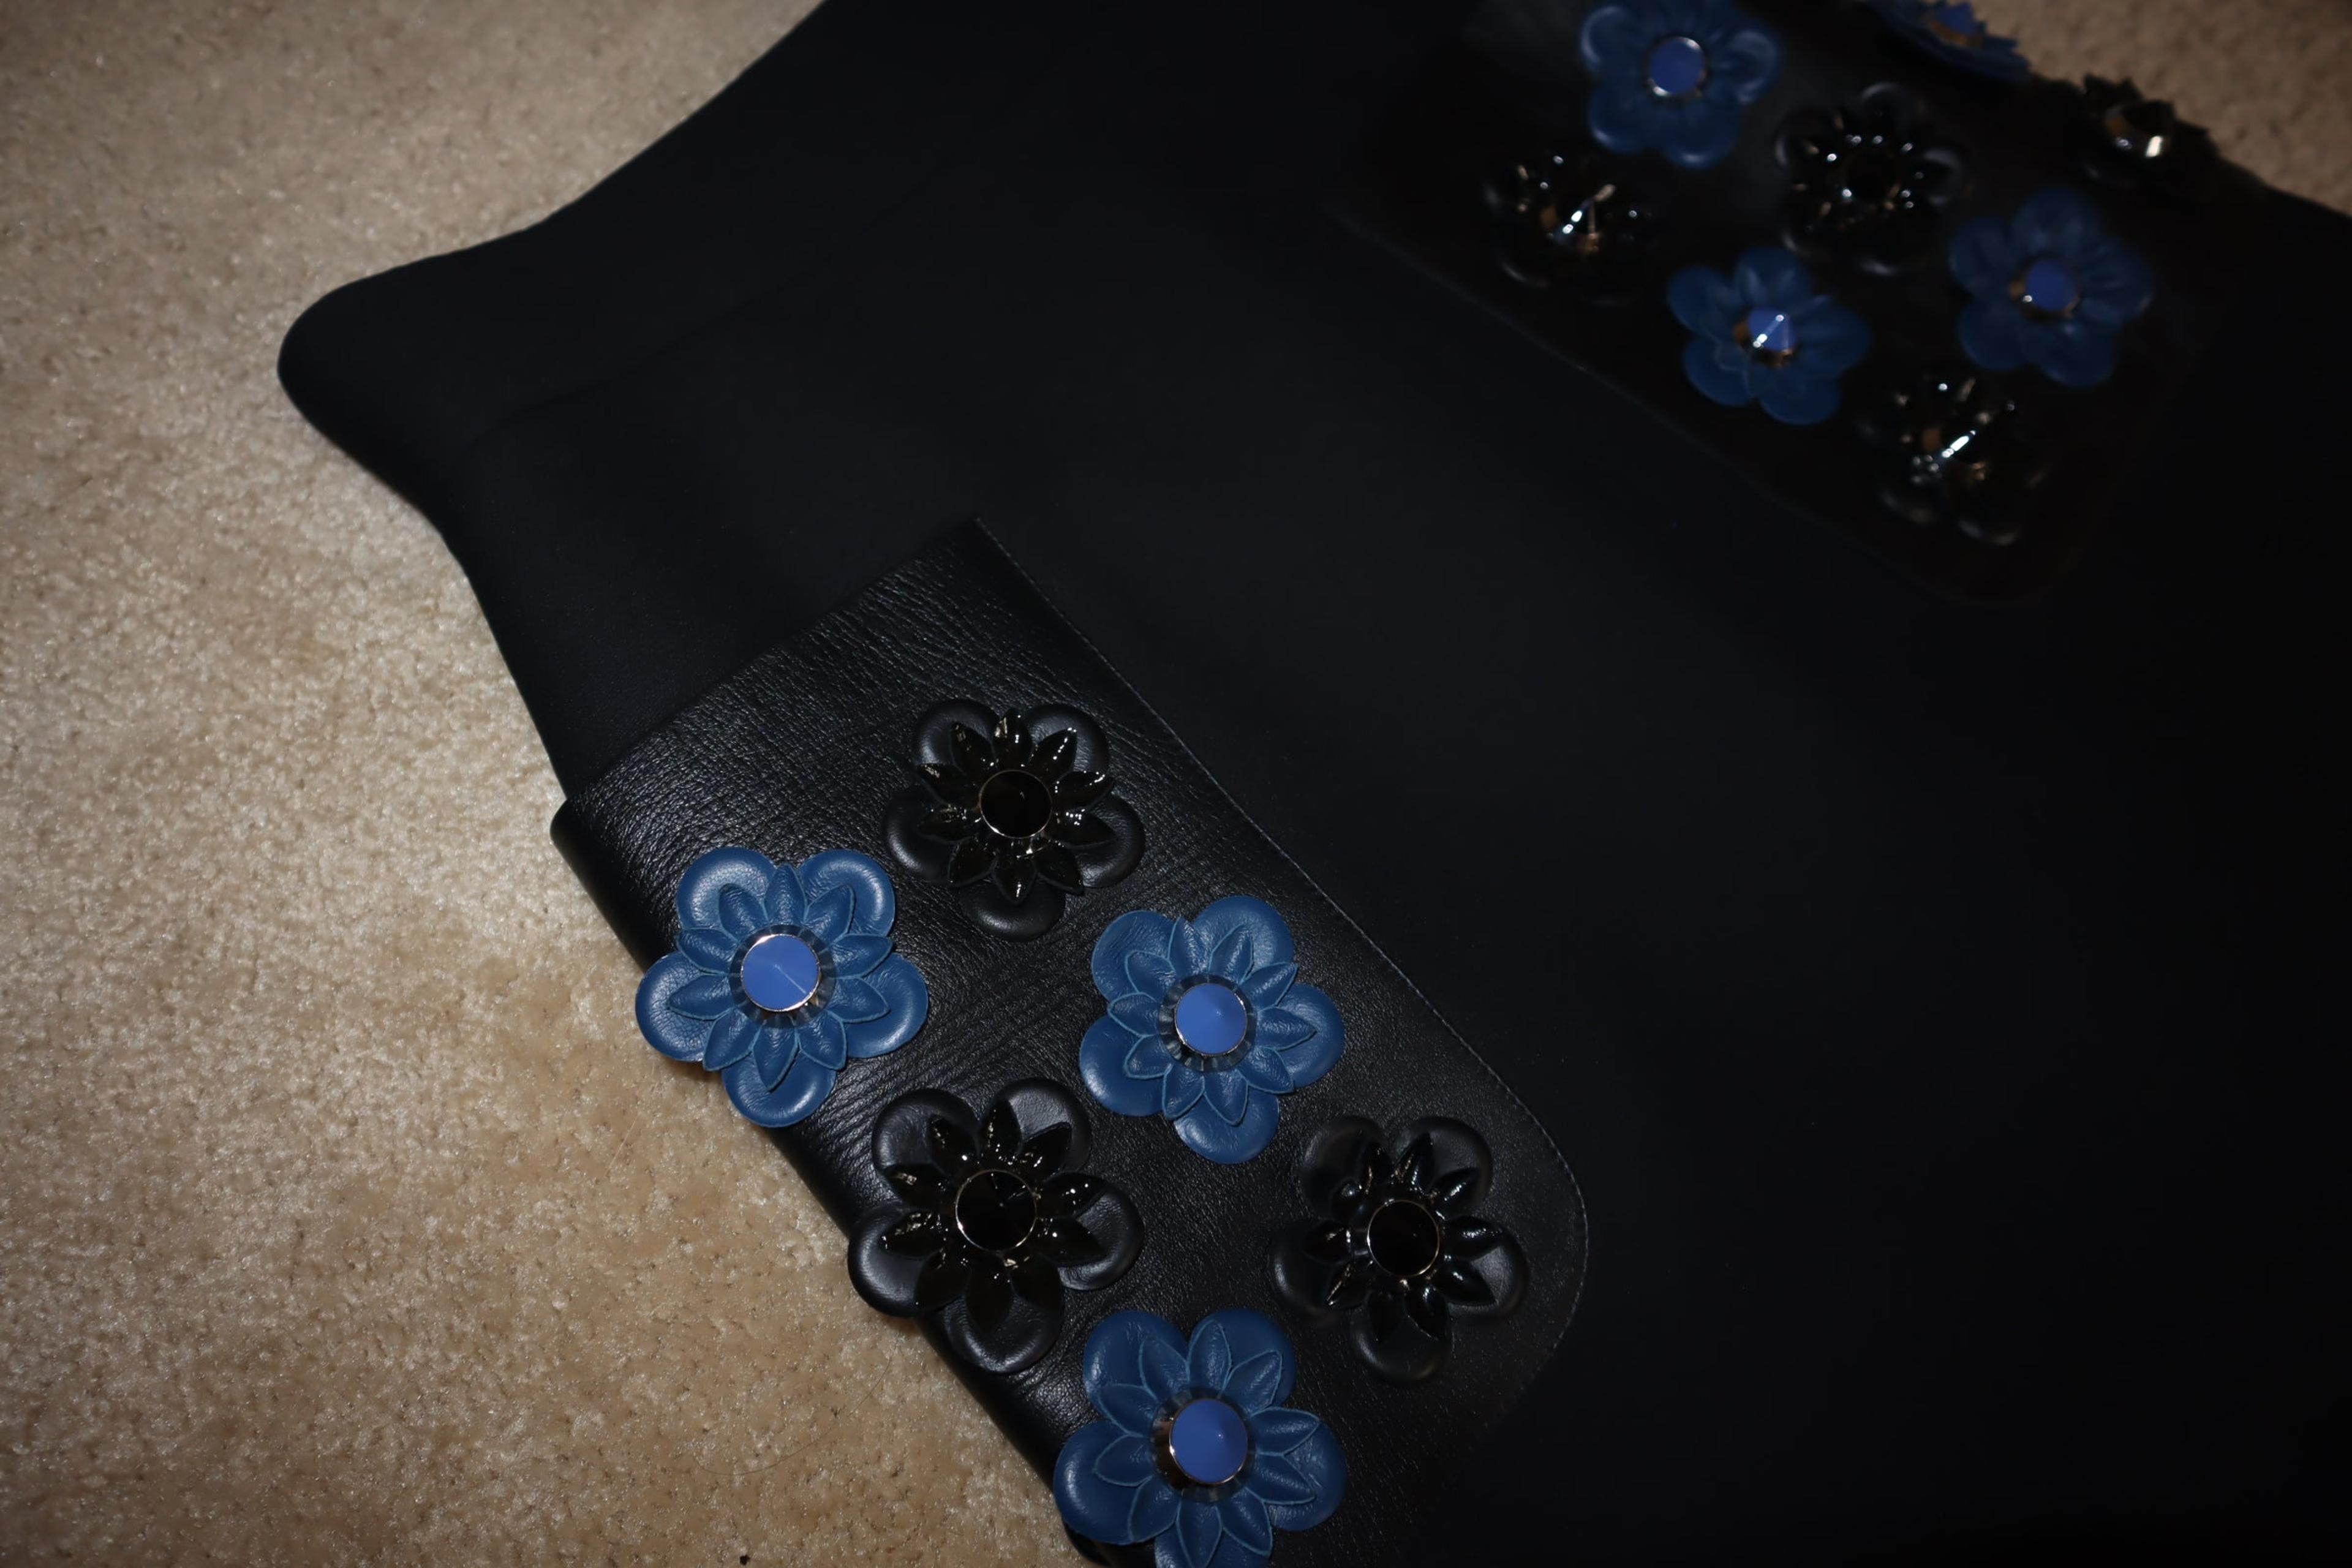 Alternate View 2 of Fendi Black Leather Floral Skirt